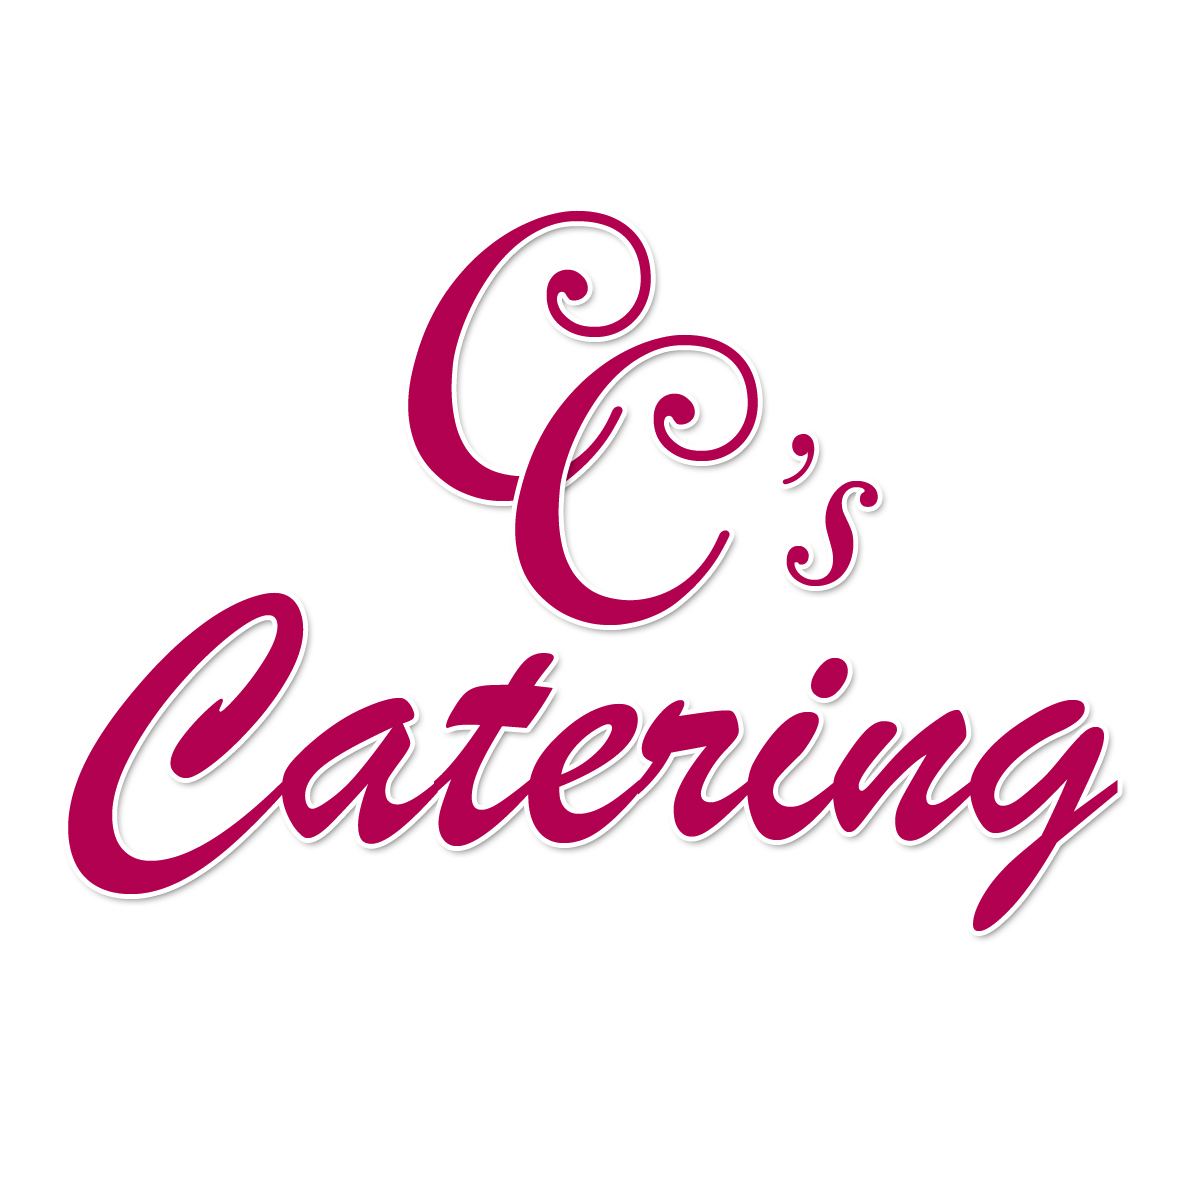 CCs Catering